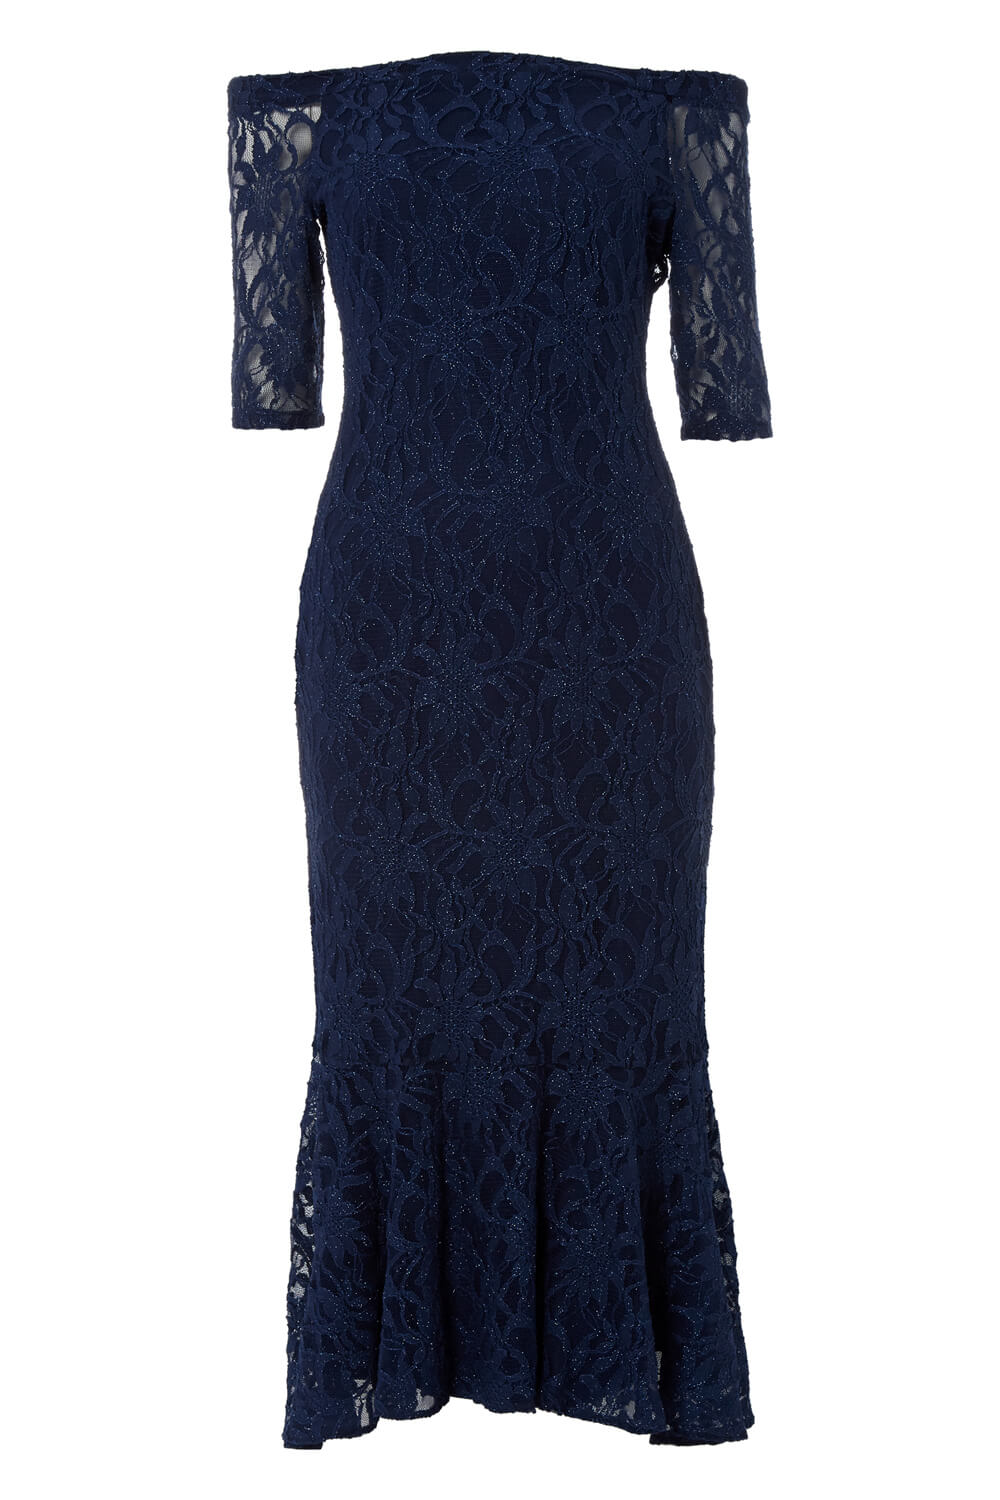 Lace Midi Bardot Dress in Navy - Roman Originals UK